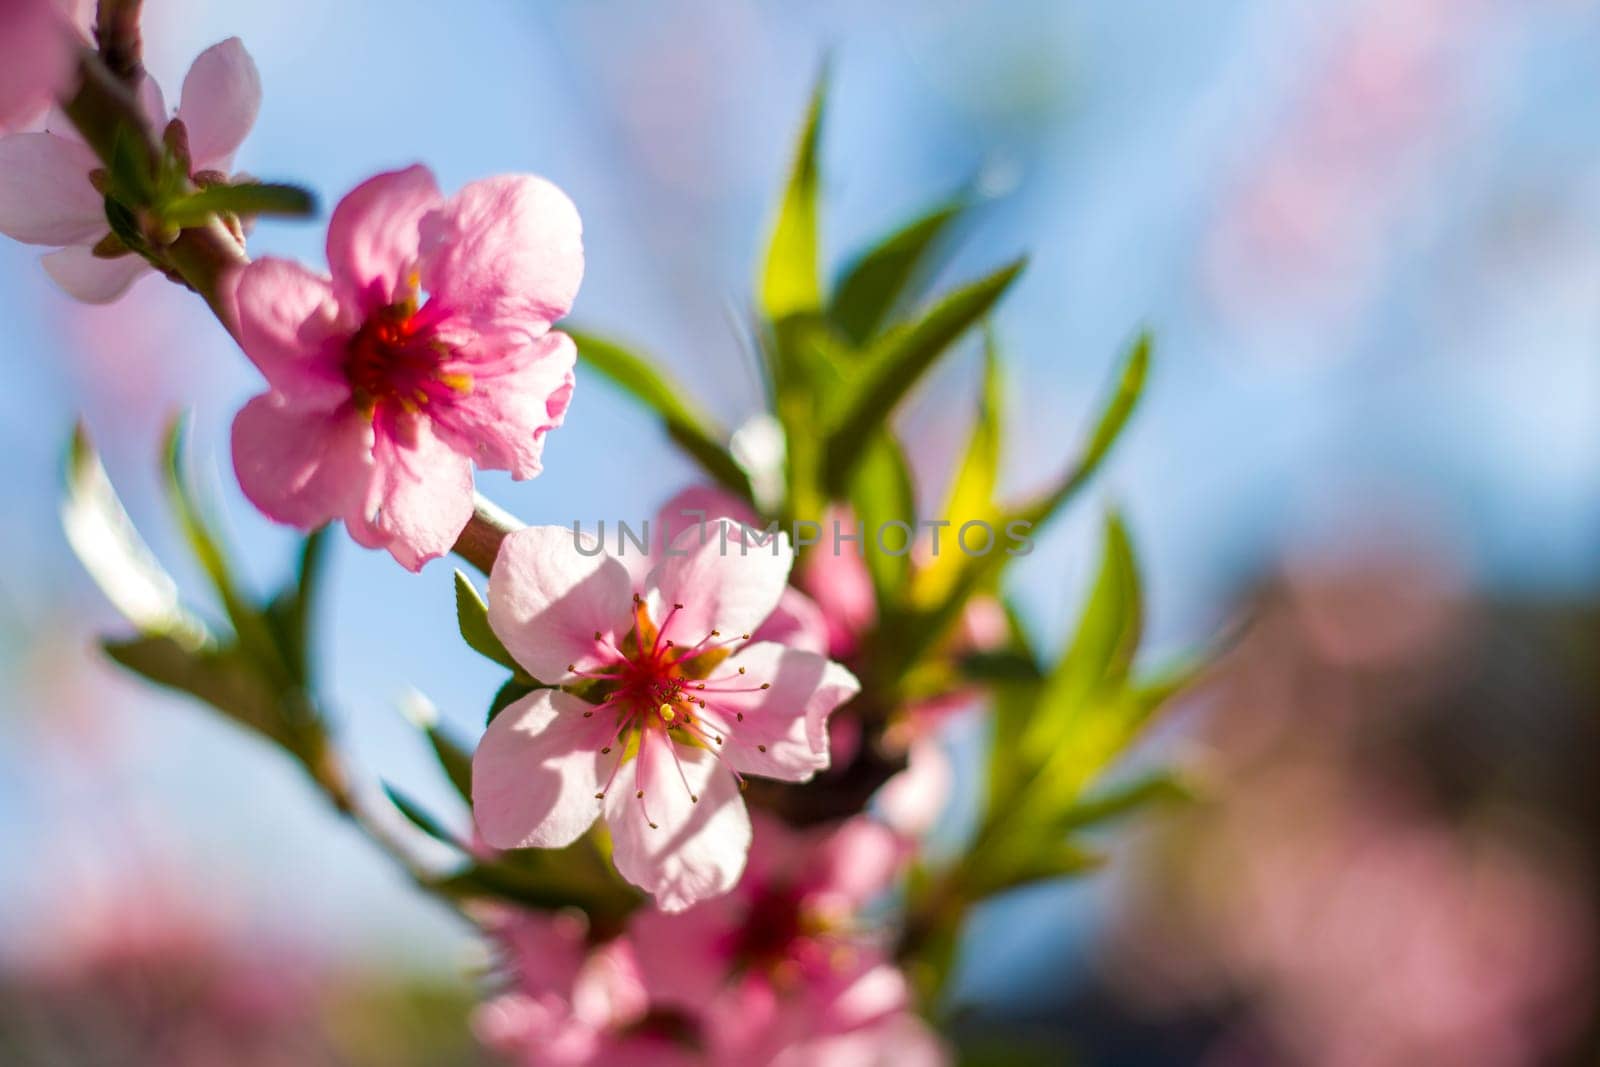 Flower blossom of spring nectarine peach branch. Agriculture beautiful season farming springtime landscape